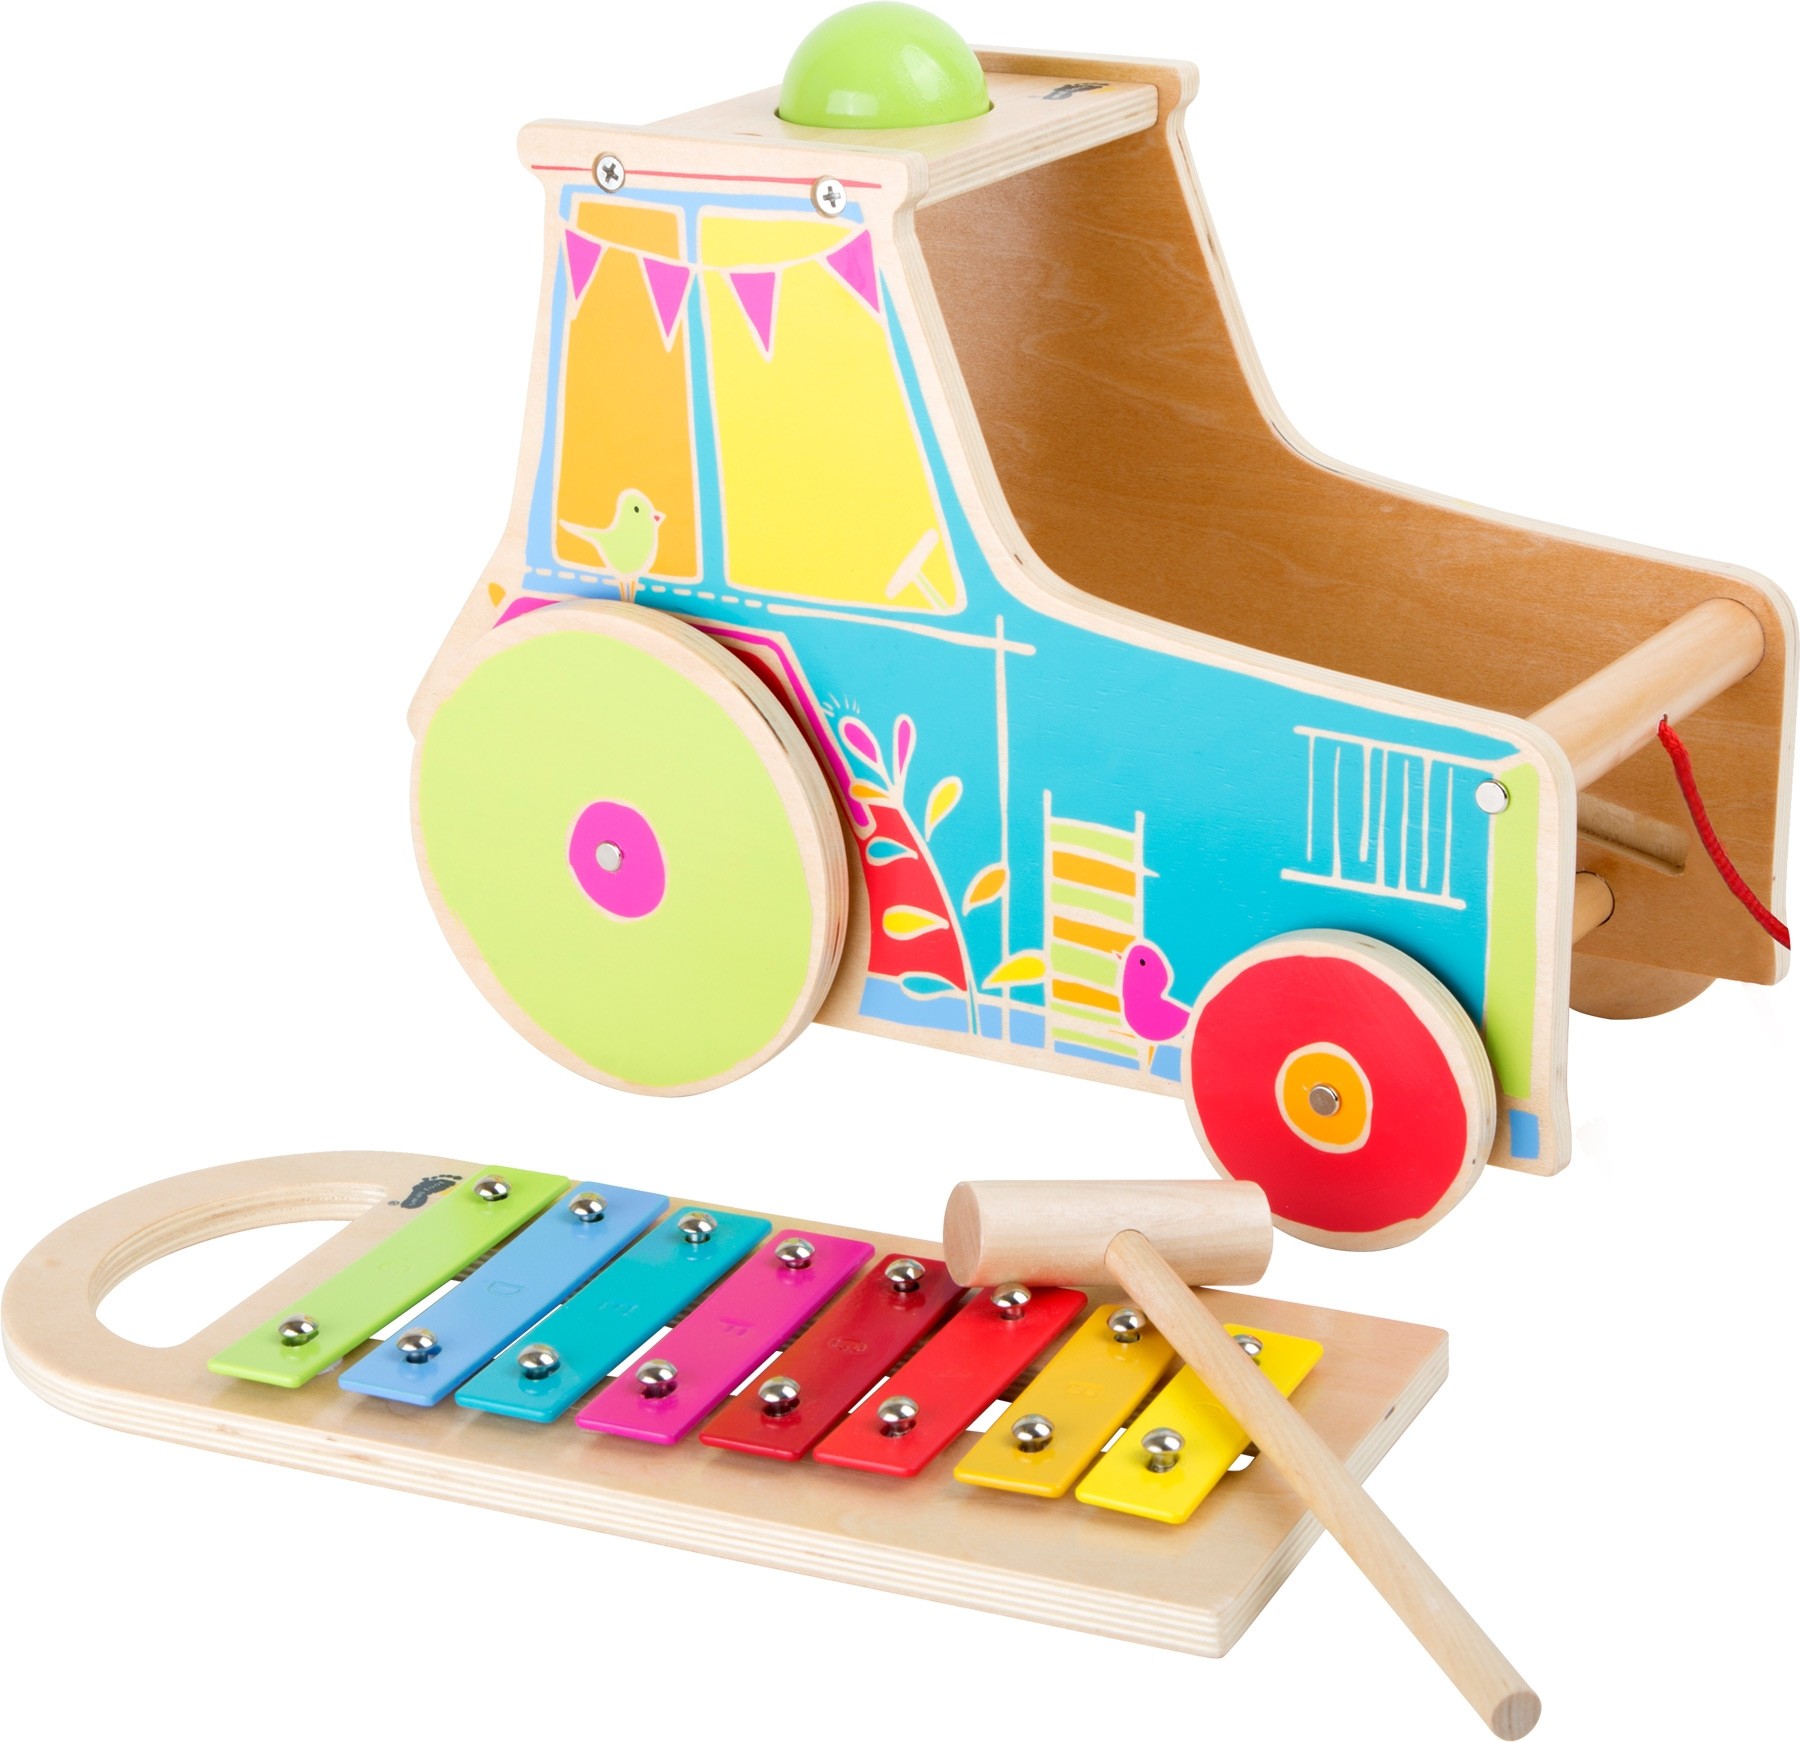 The guests pale Thaw, thaw, frost thaw Tractor de jucarie cu xilofon pentru copii +18 luni | Jocuri interactive  din lemn - Marque.ro